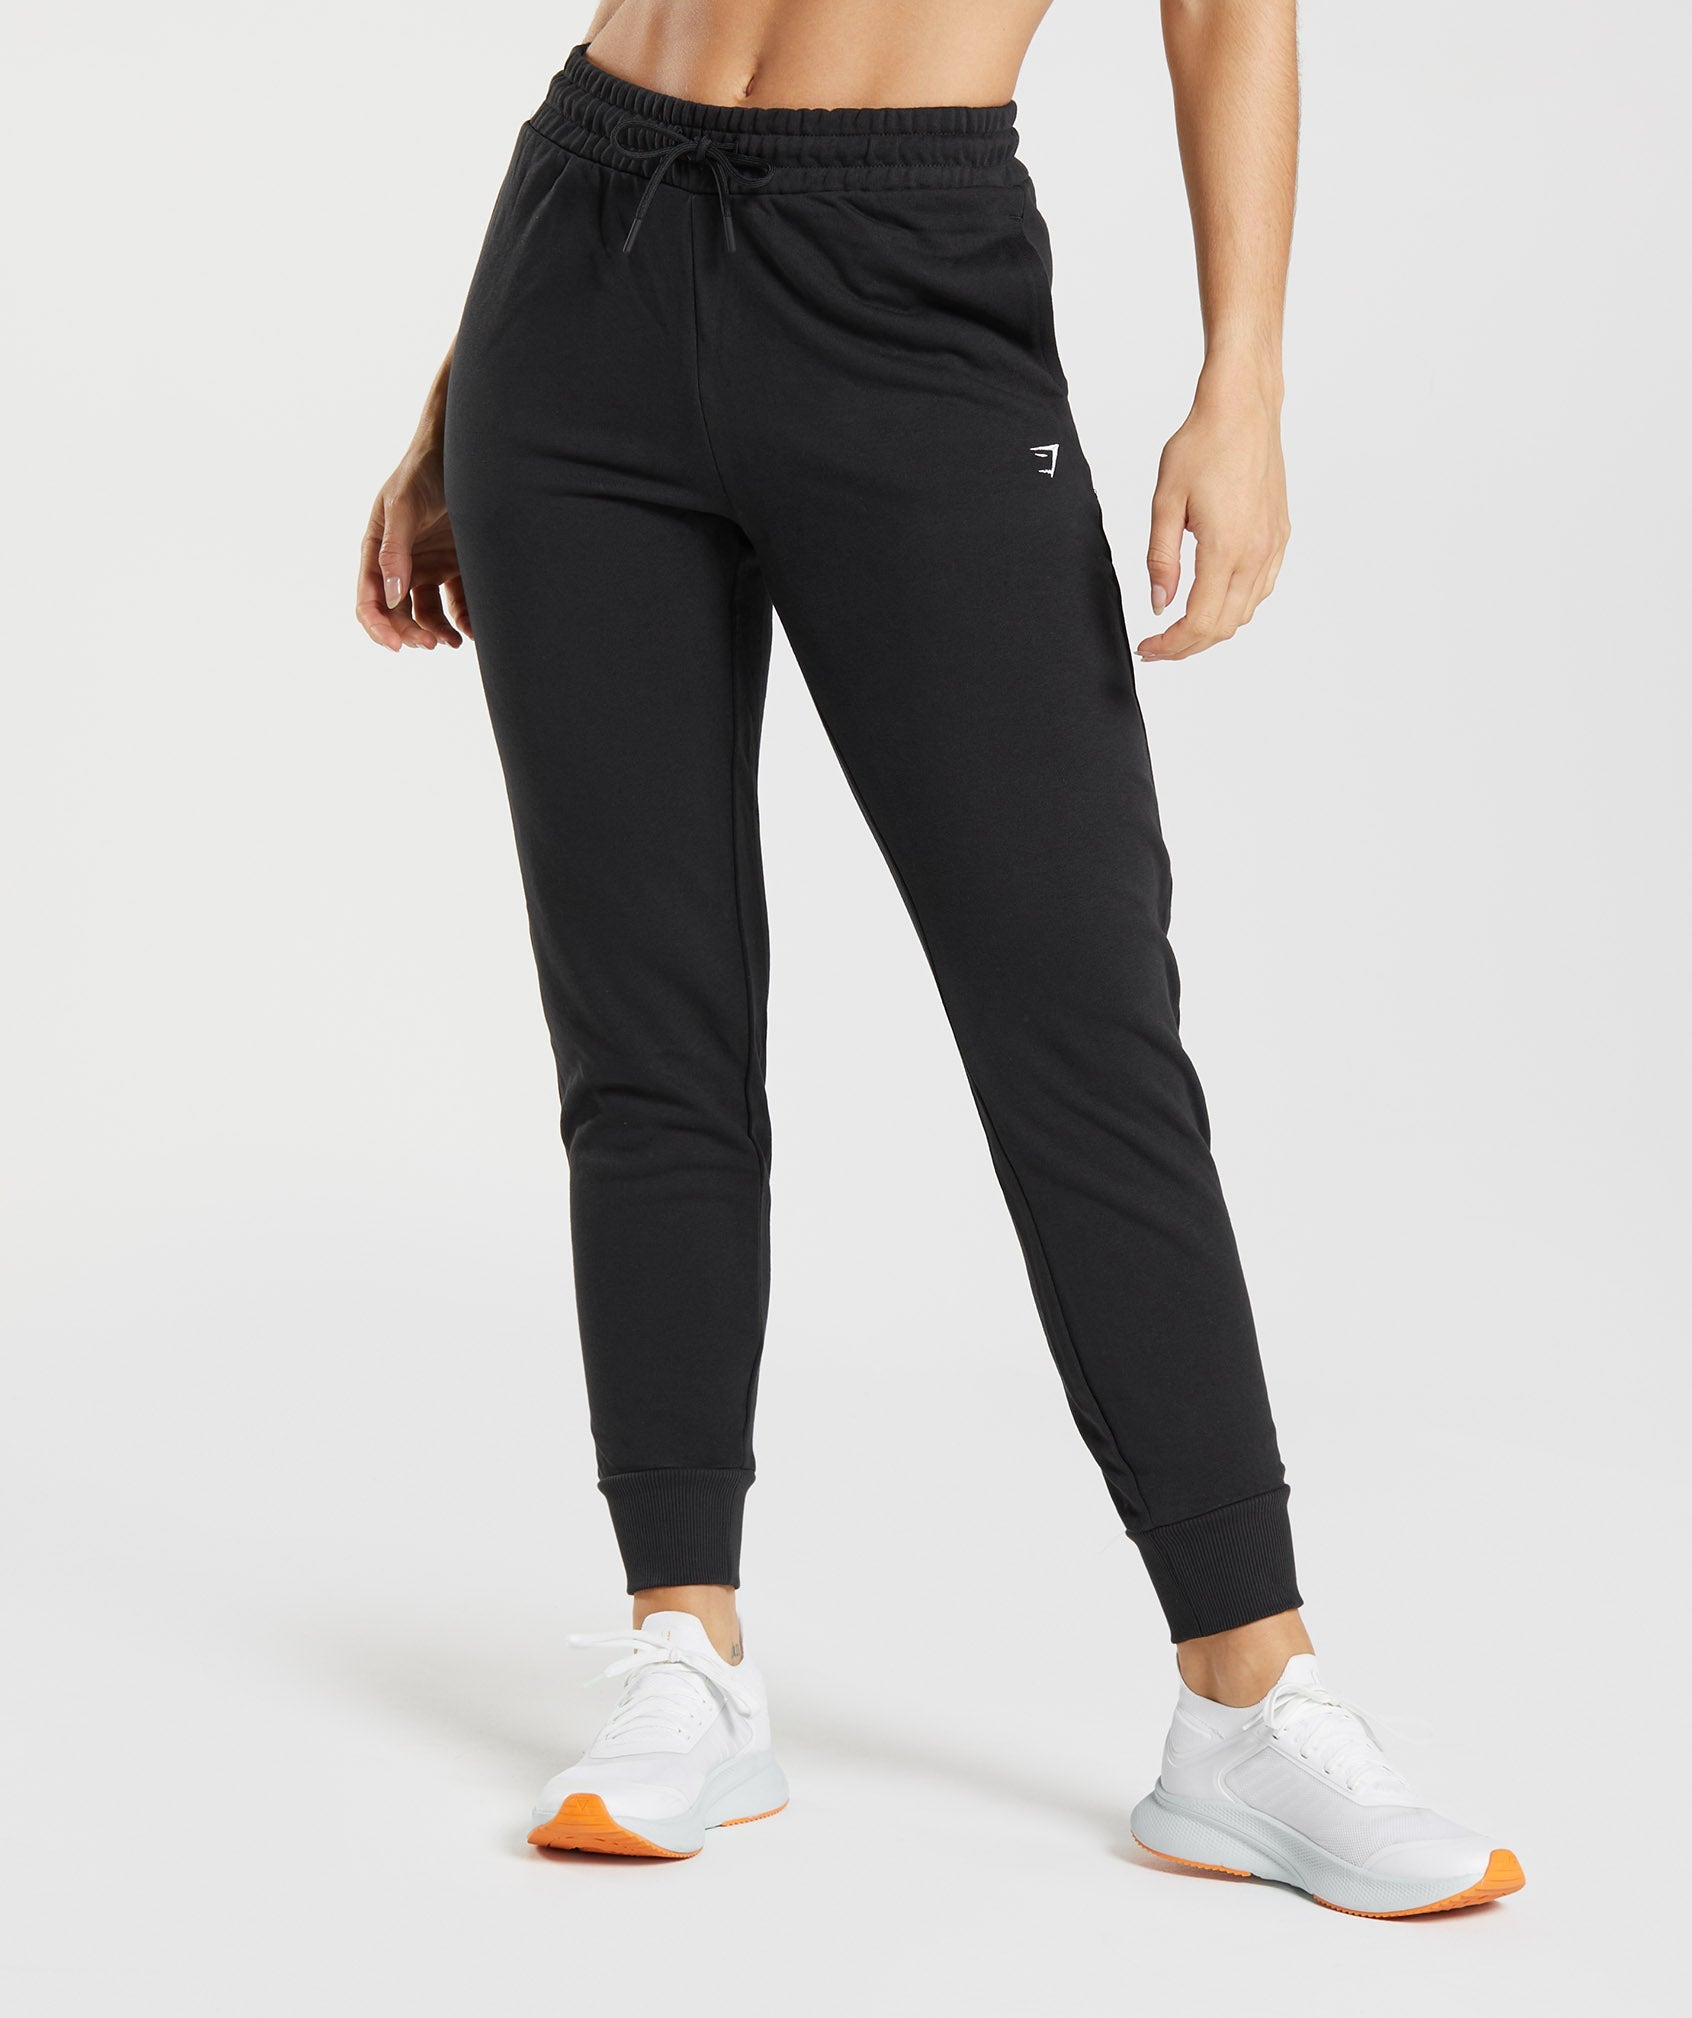 Gymshark Joggers Womens M Black High Rise Drawstring Zipper Pockets Sweat  Pants